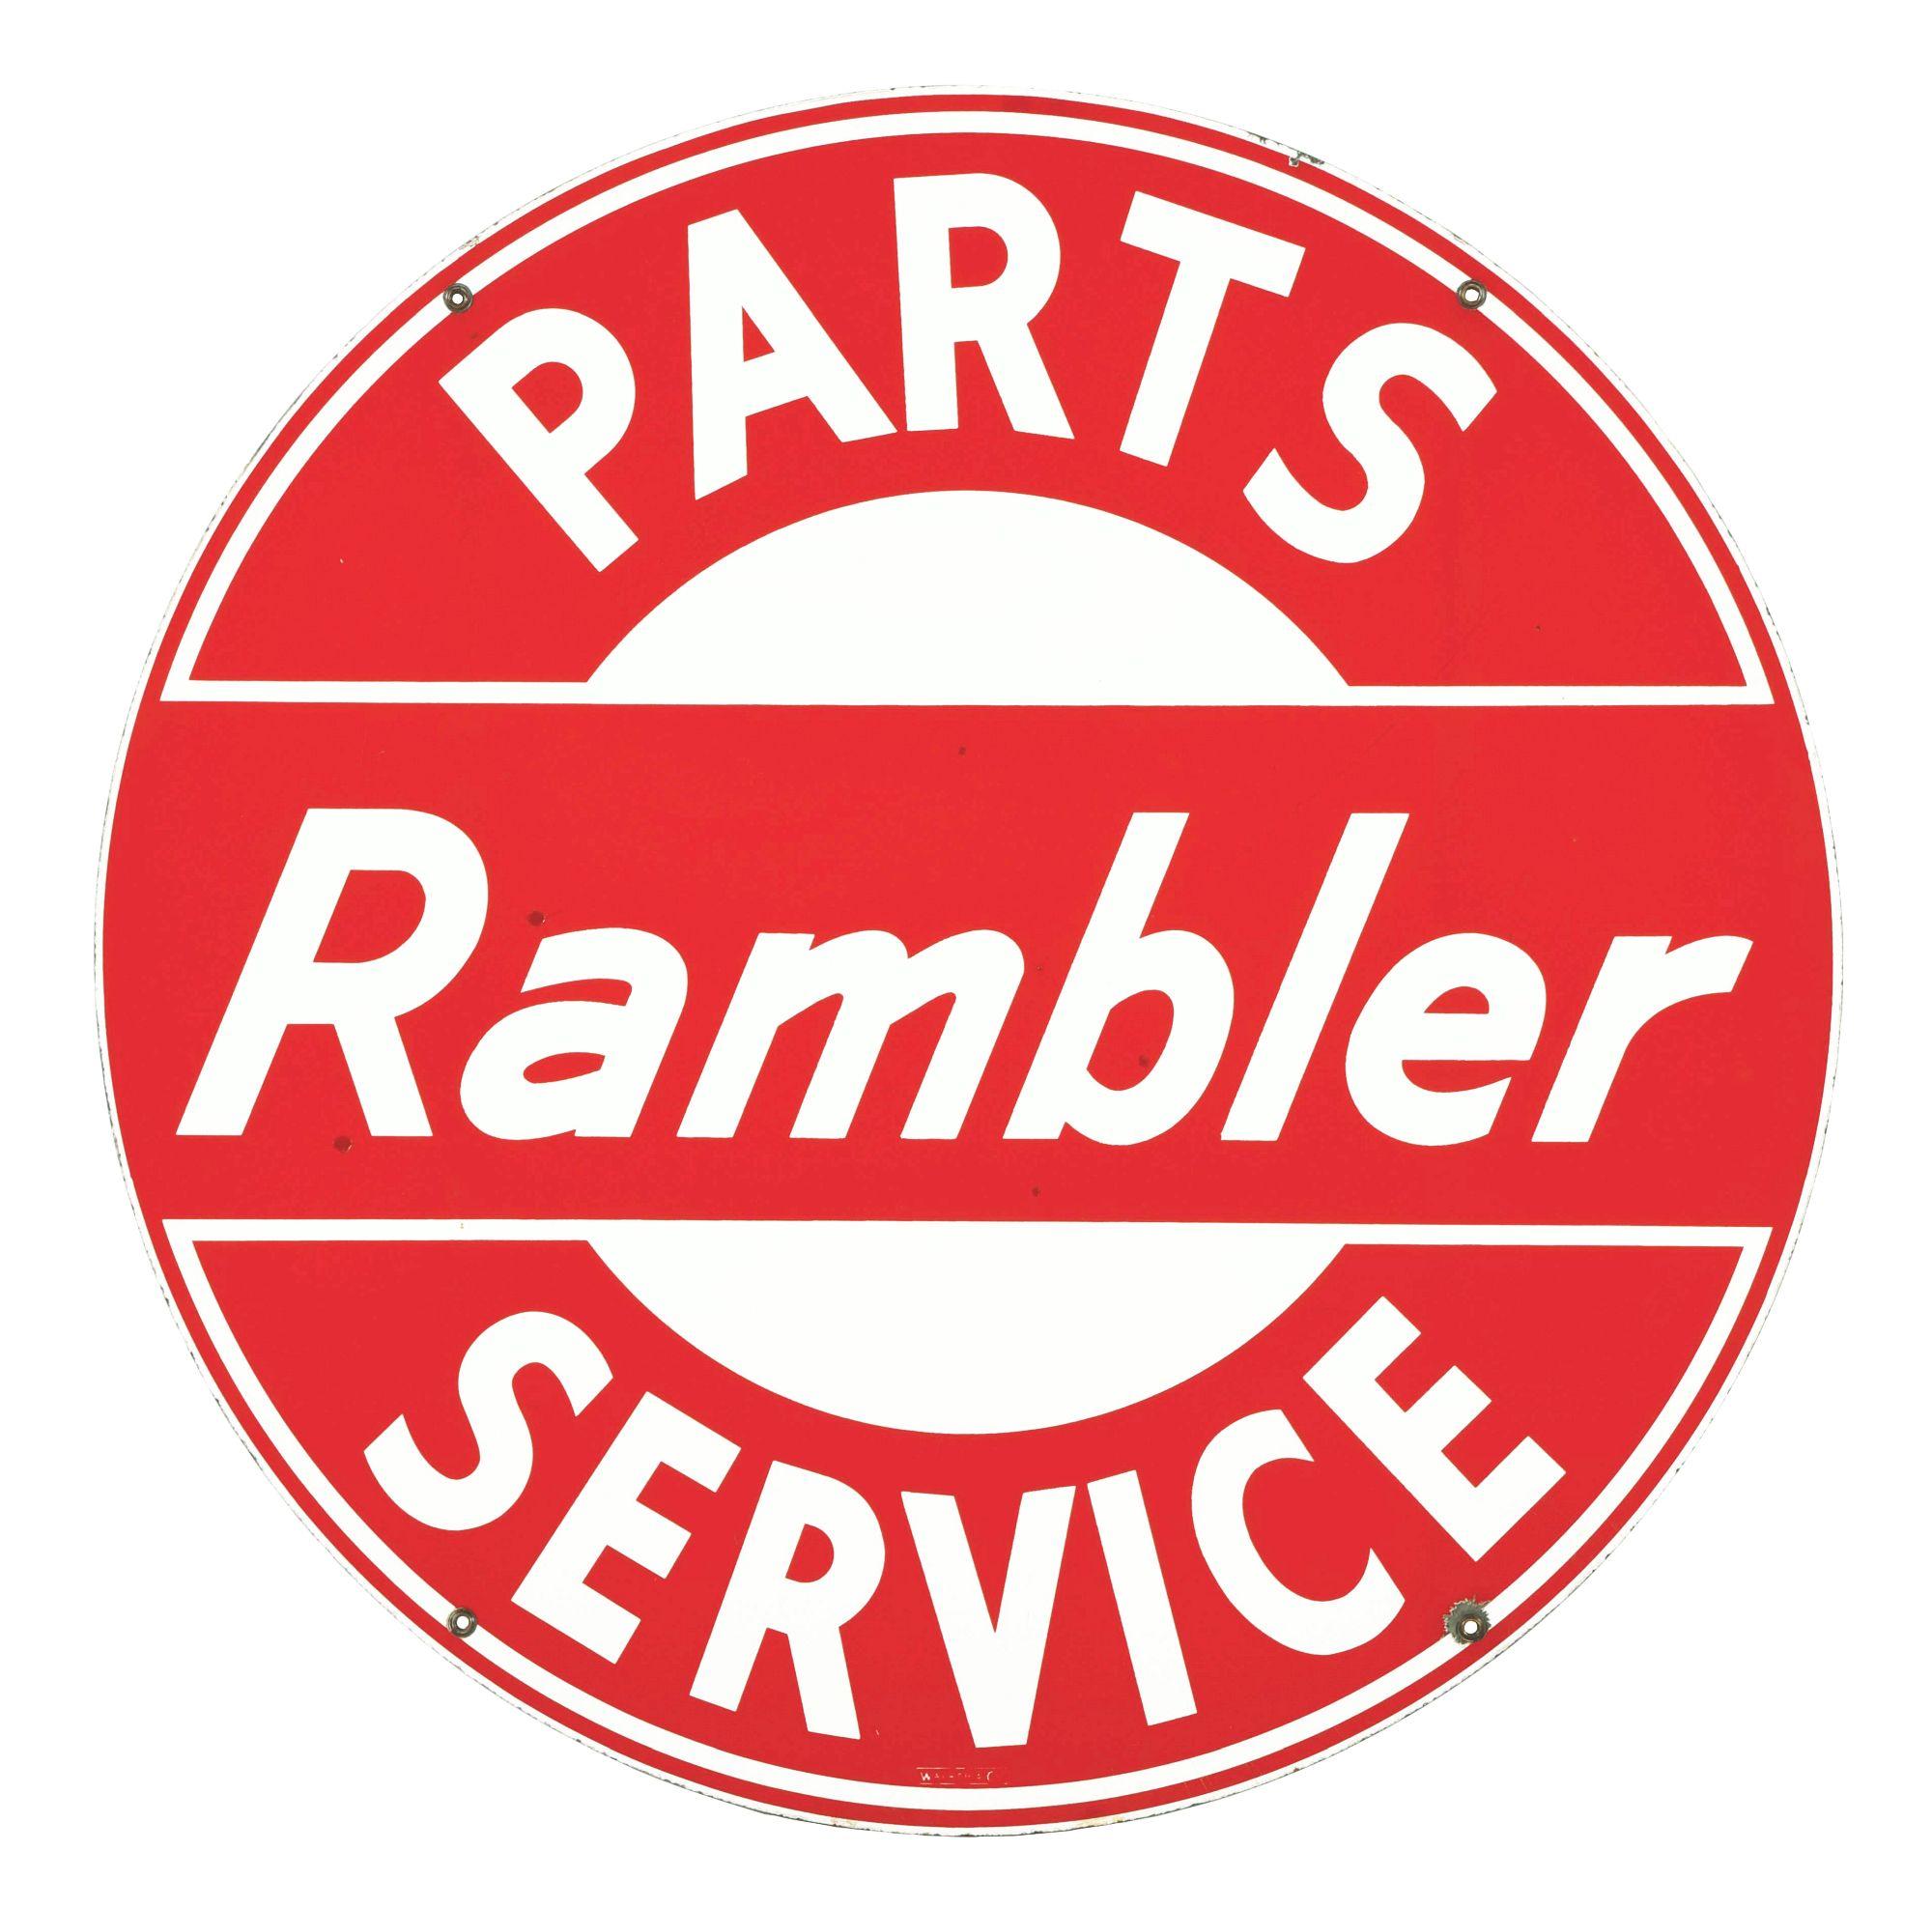 RAMBLER PARTS & SERVICE PORCELAIN SIGN.